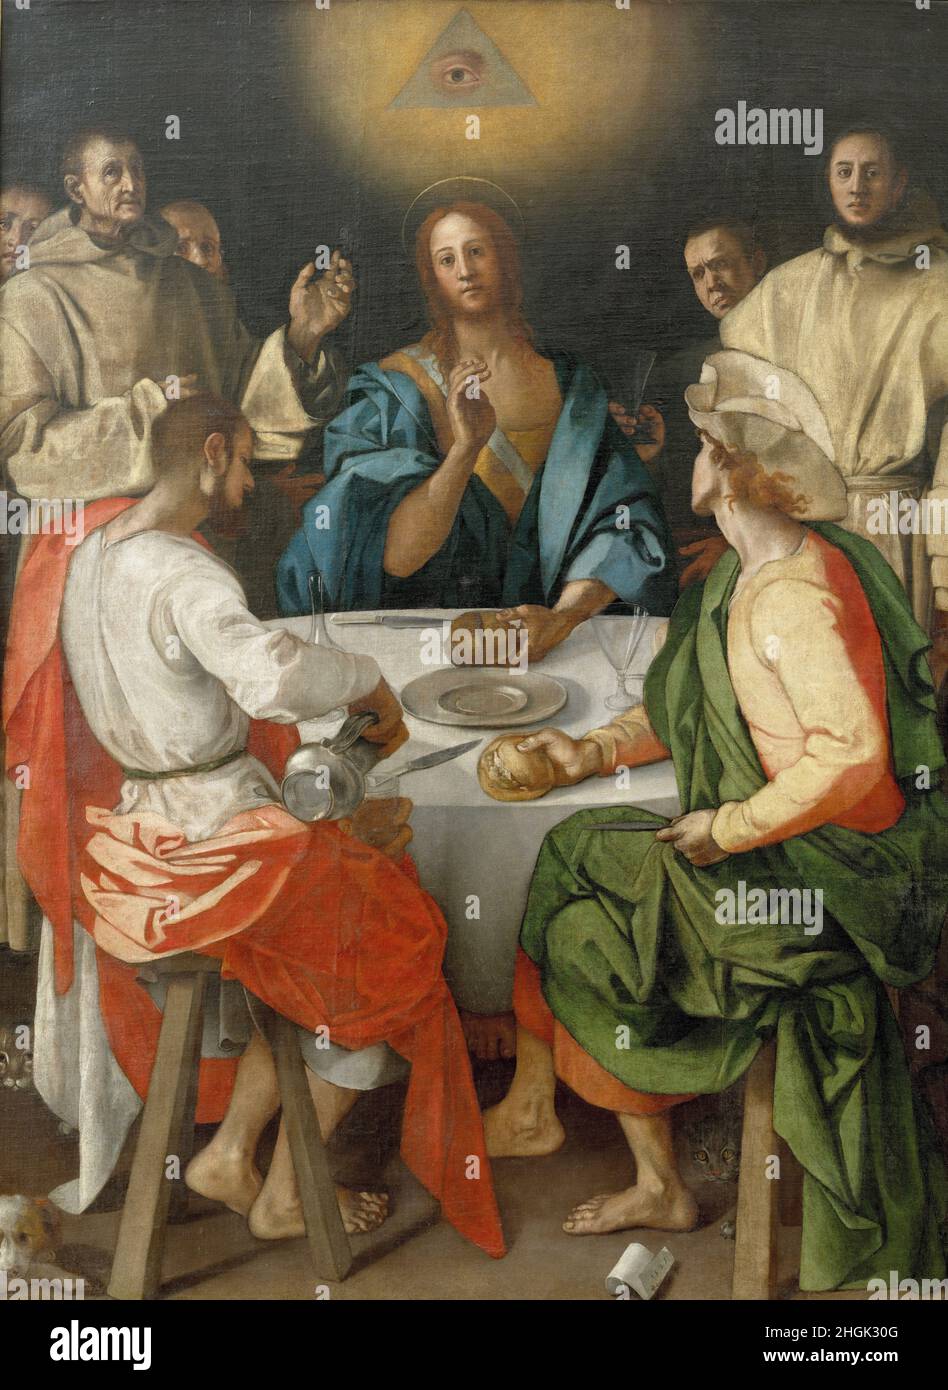 Cena in Emmaus - 1525 - oil on canvas 230 x 173 cm - Carucci Jacopo - Pontormo - Stock Photo